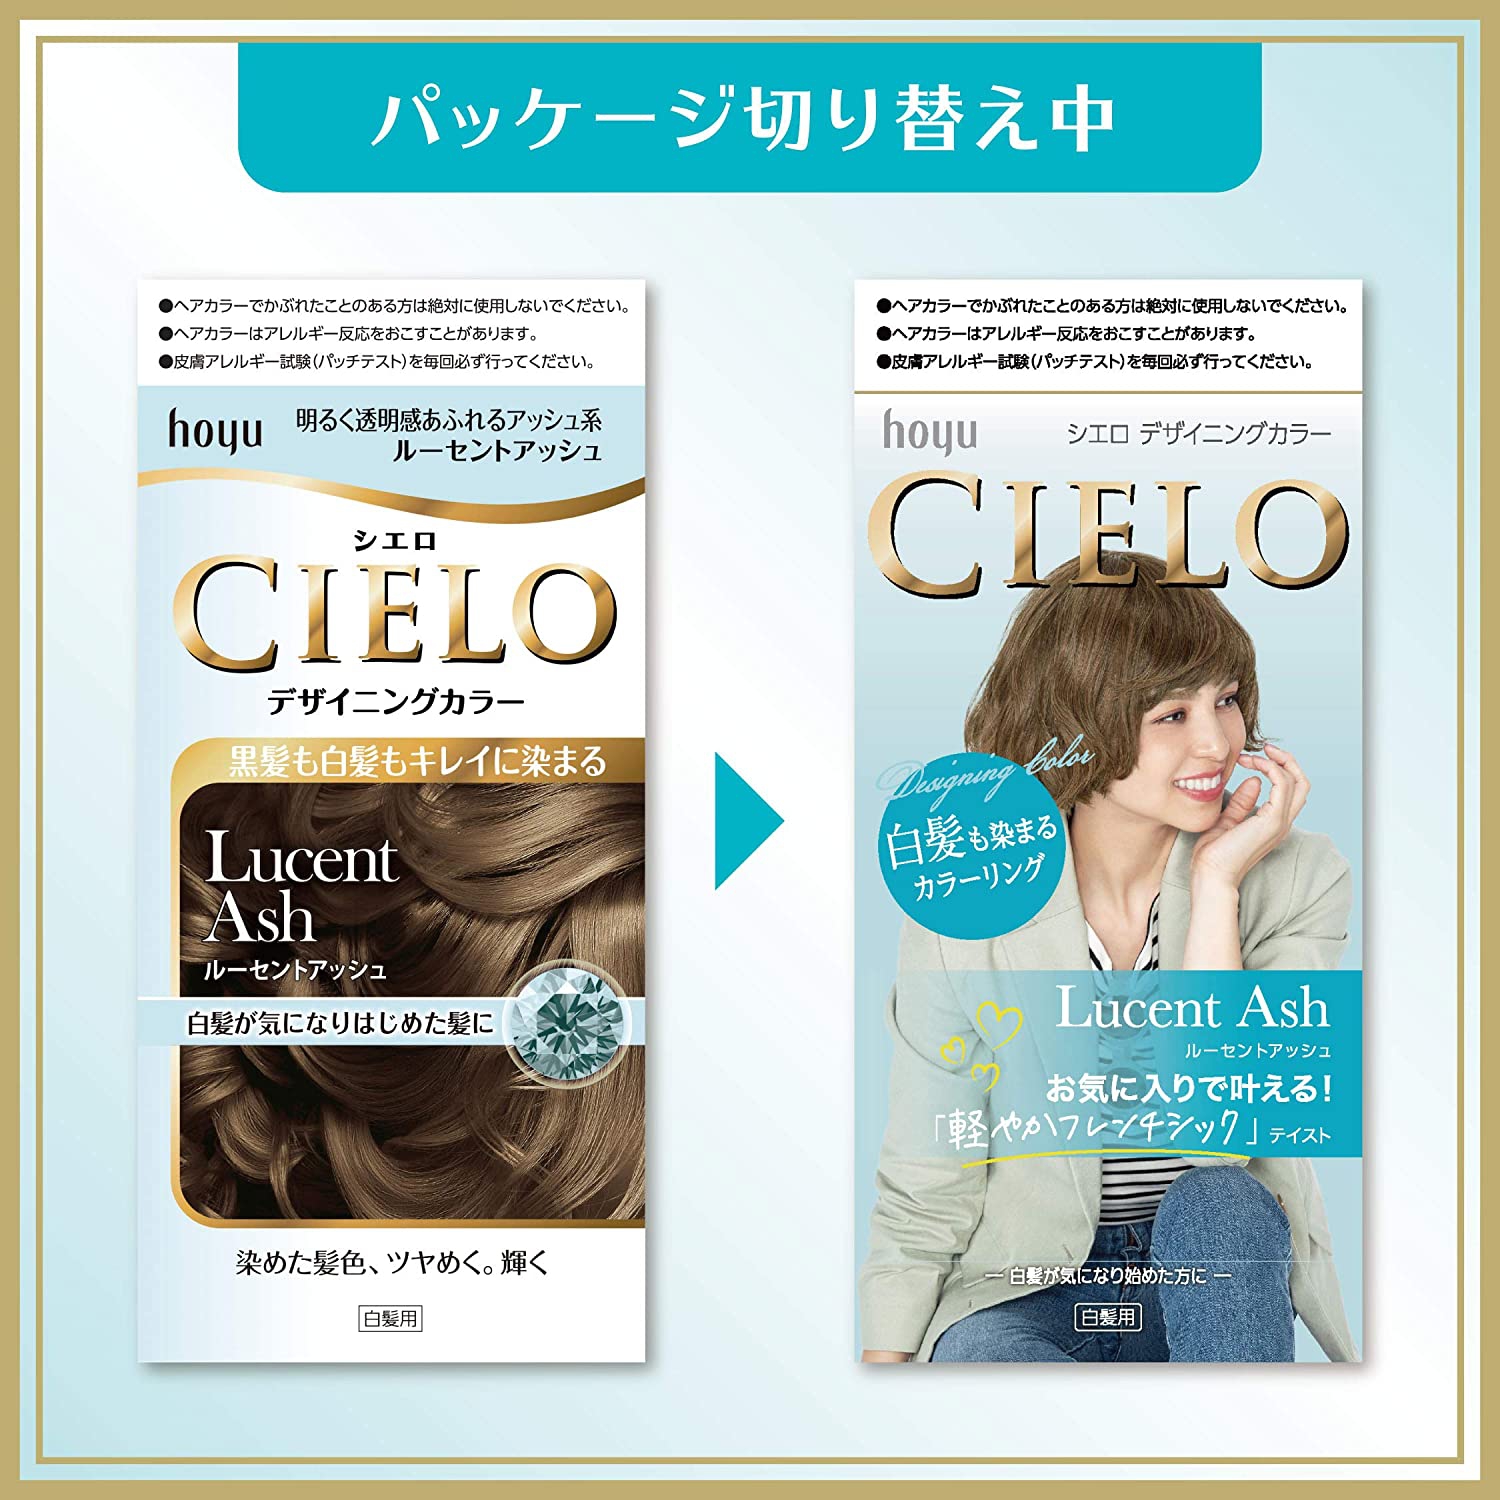 CIELO(シエロ) デザイニングカラーの商品画像サムネ2 